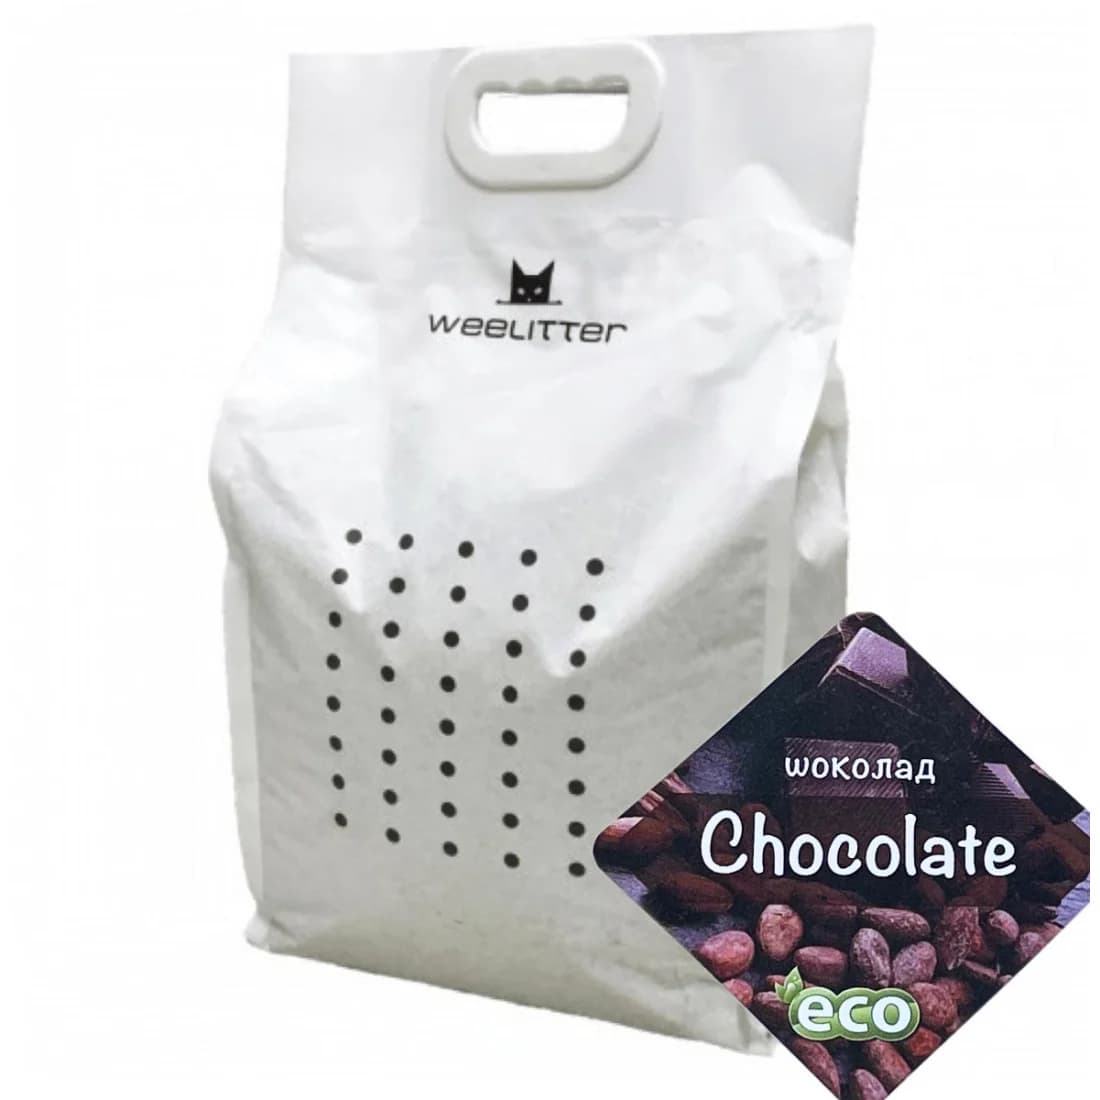 MiniWee Eco Chocolate 